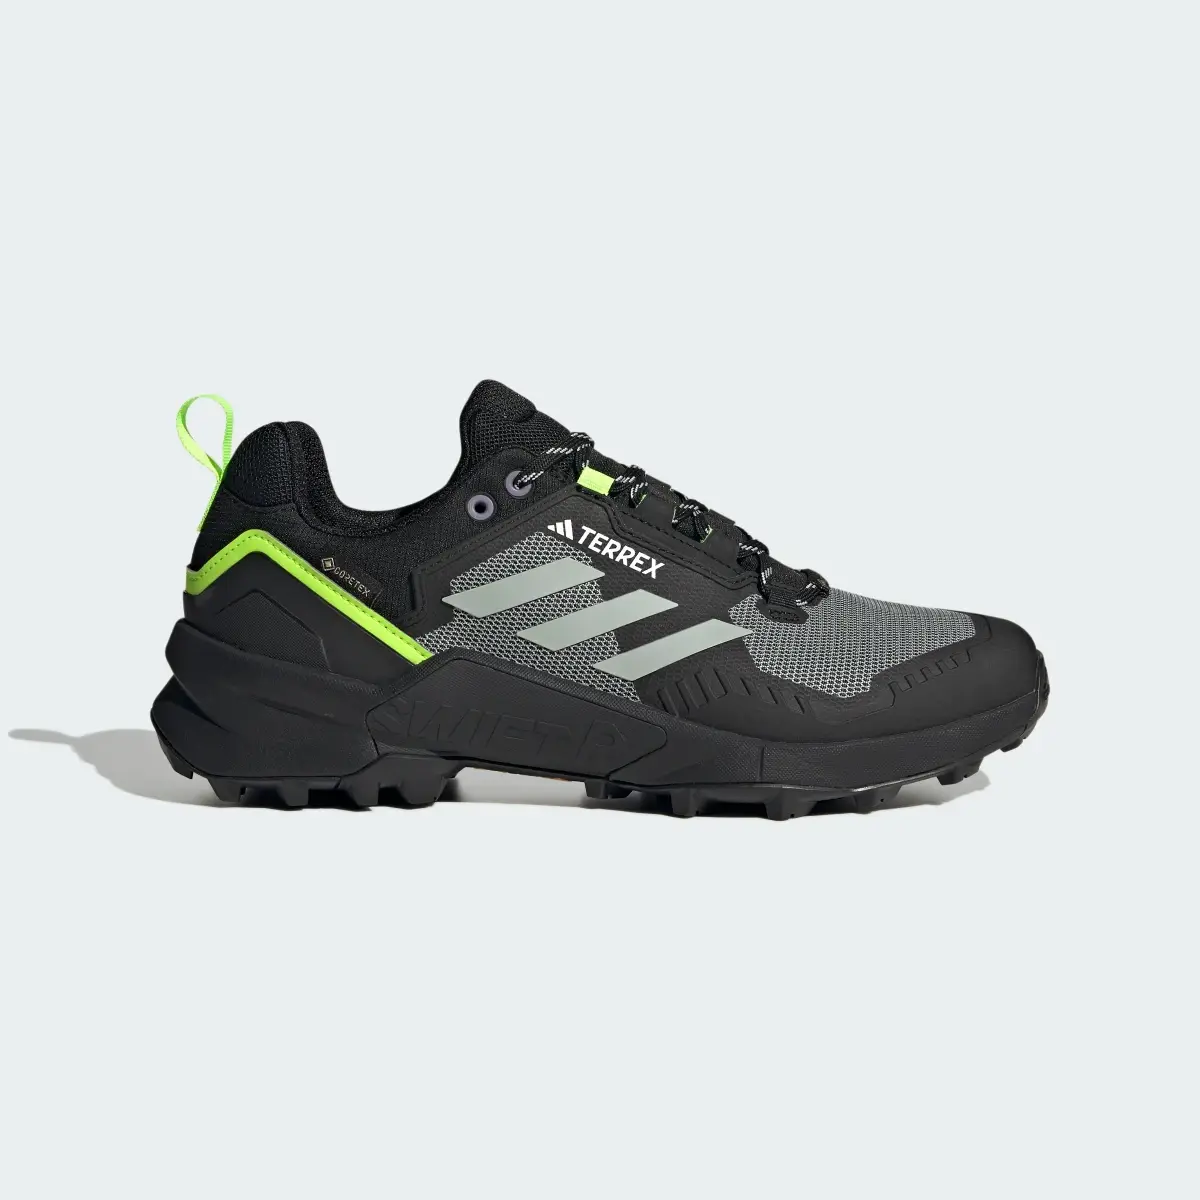 Adidas TERREX Swift R3 GORE-TEX Hiking Shoes. 2